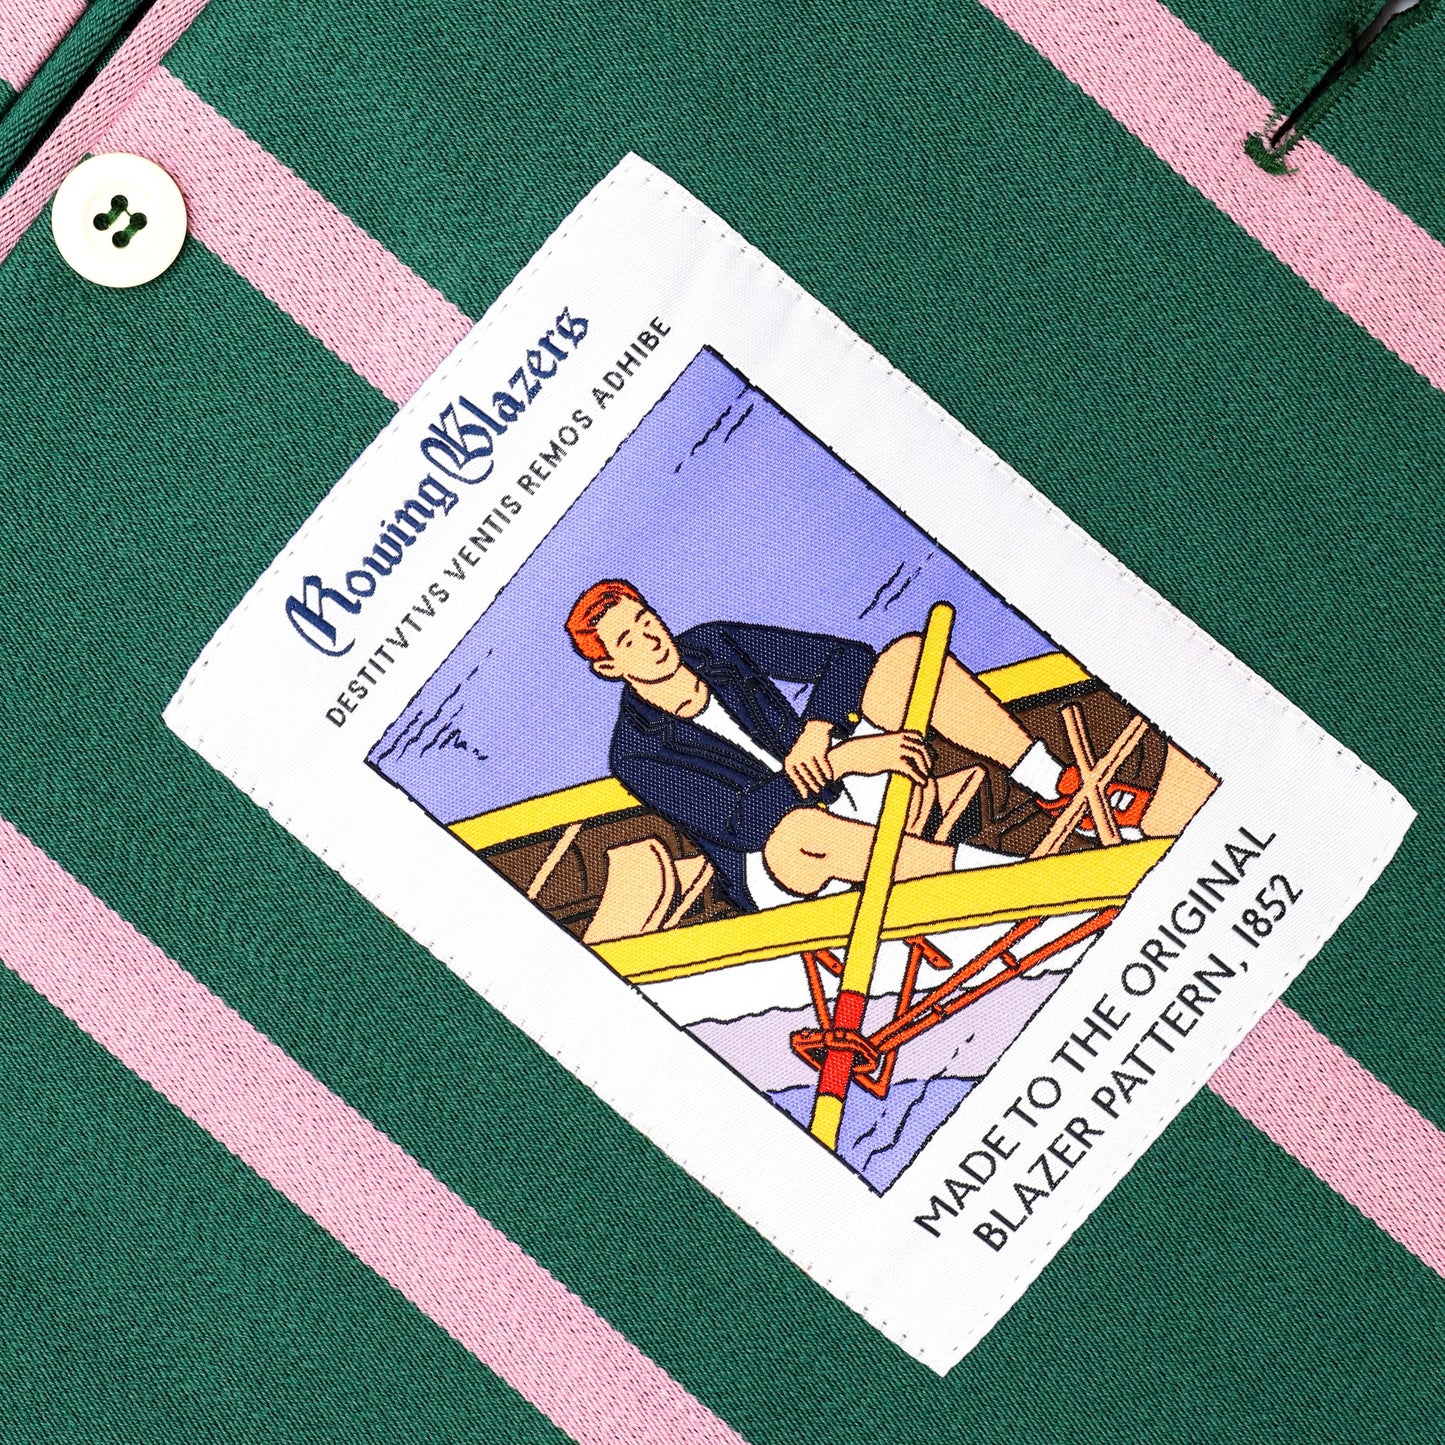 Green and Pink "1980 Stripe" Blazer